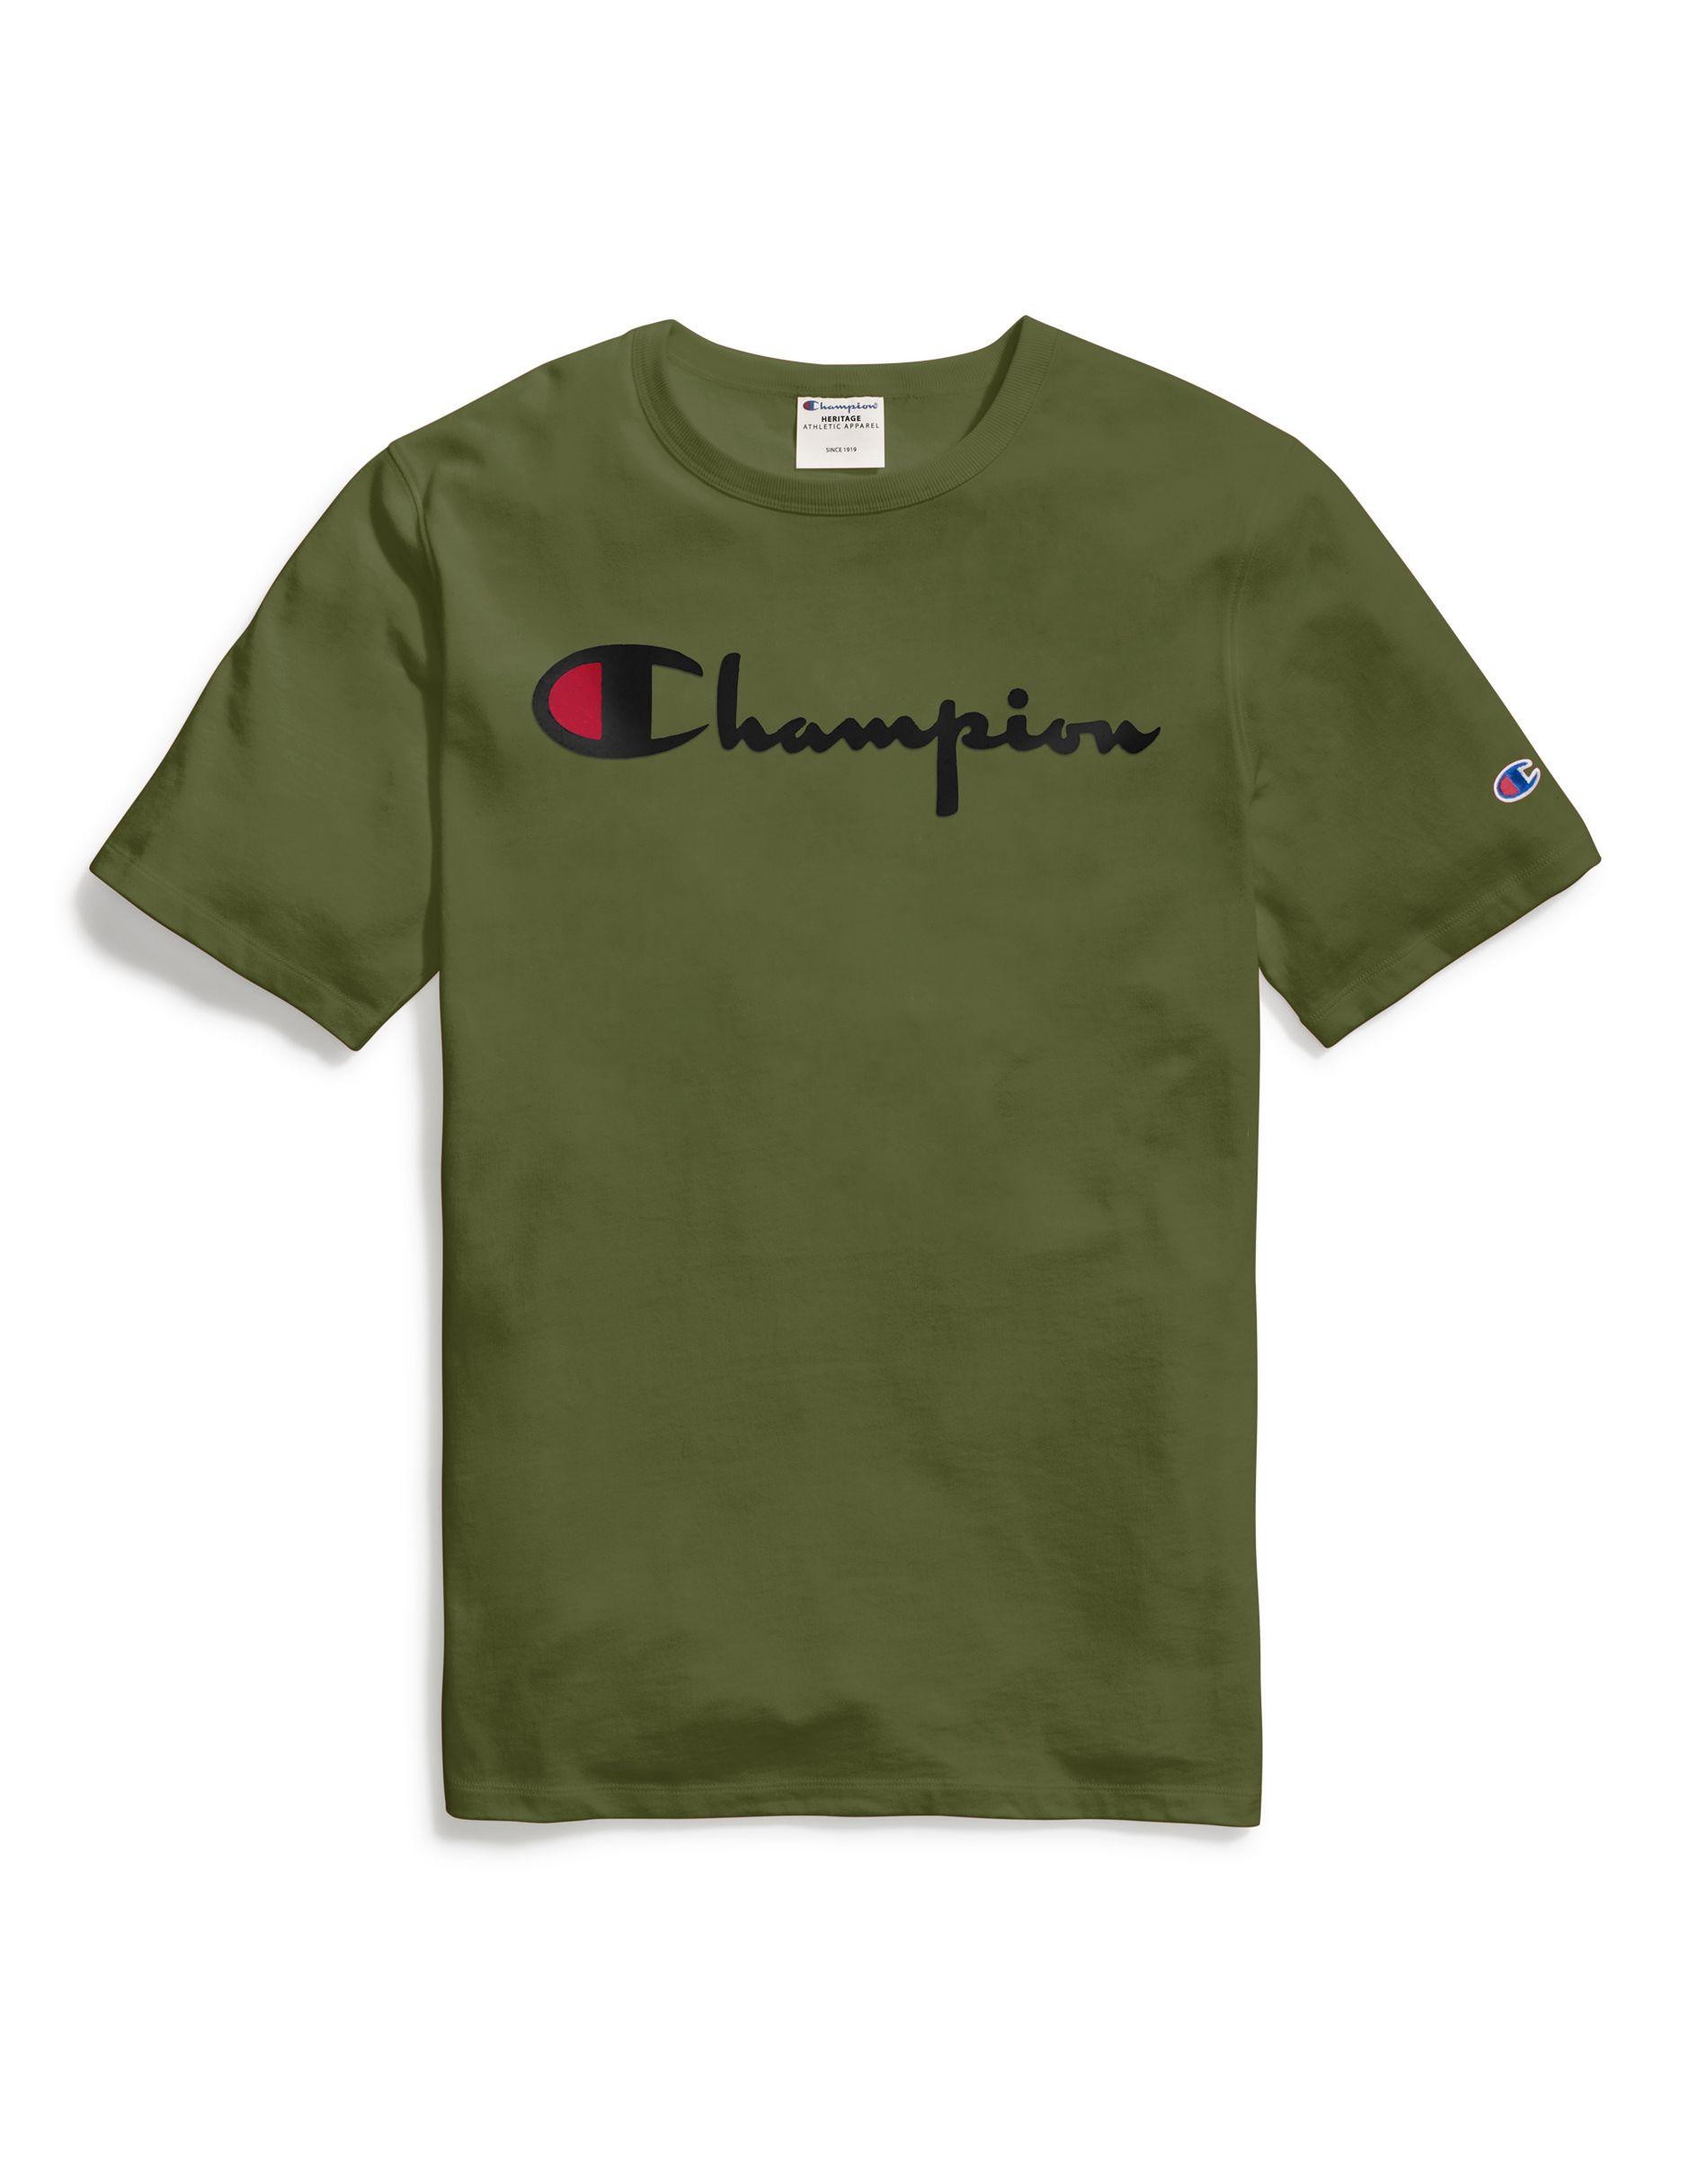 champion shirt olive green